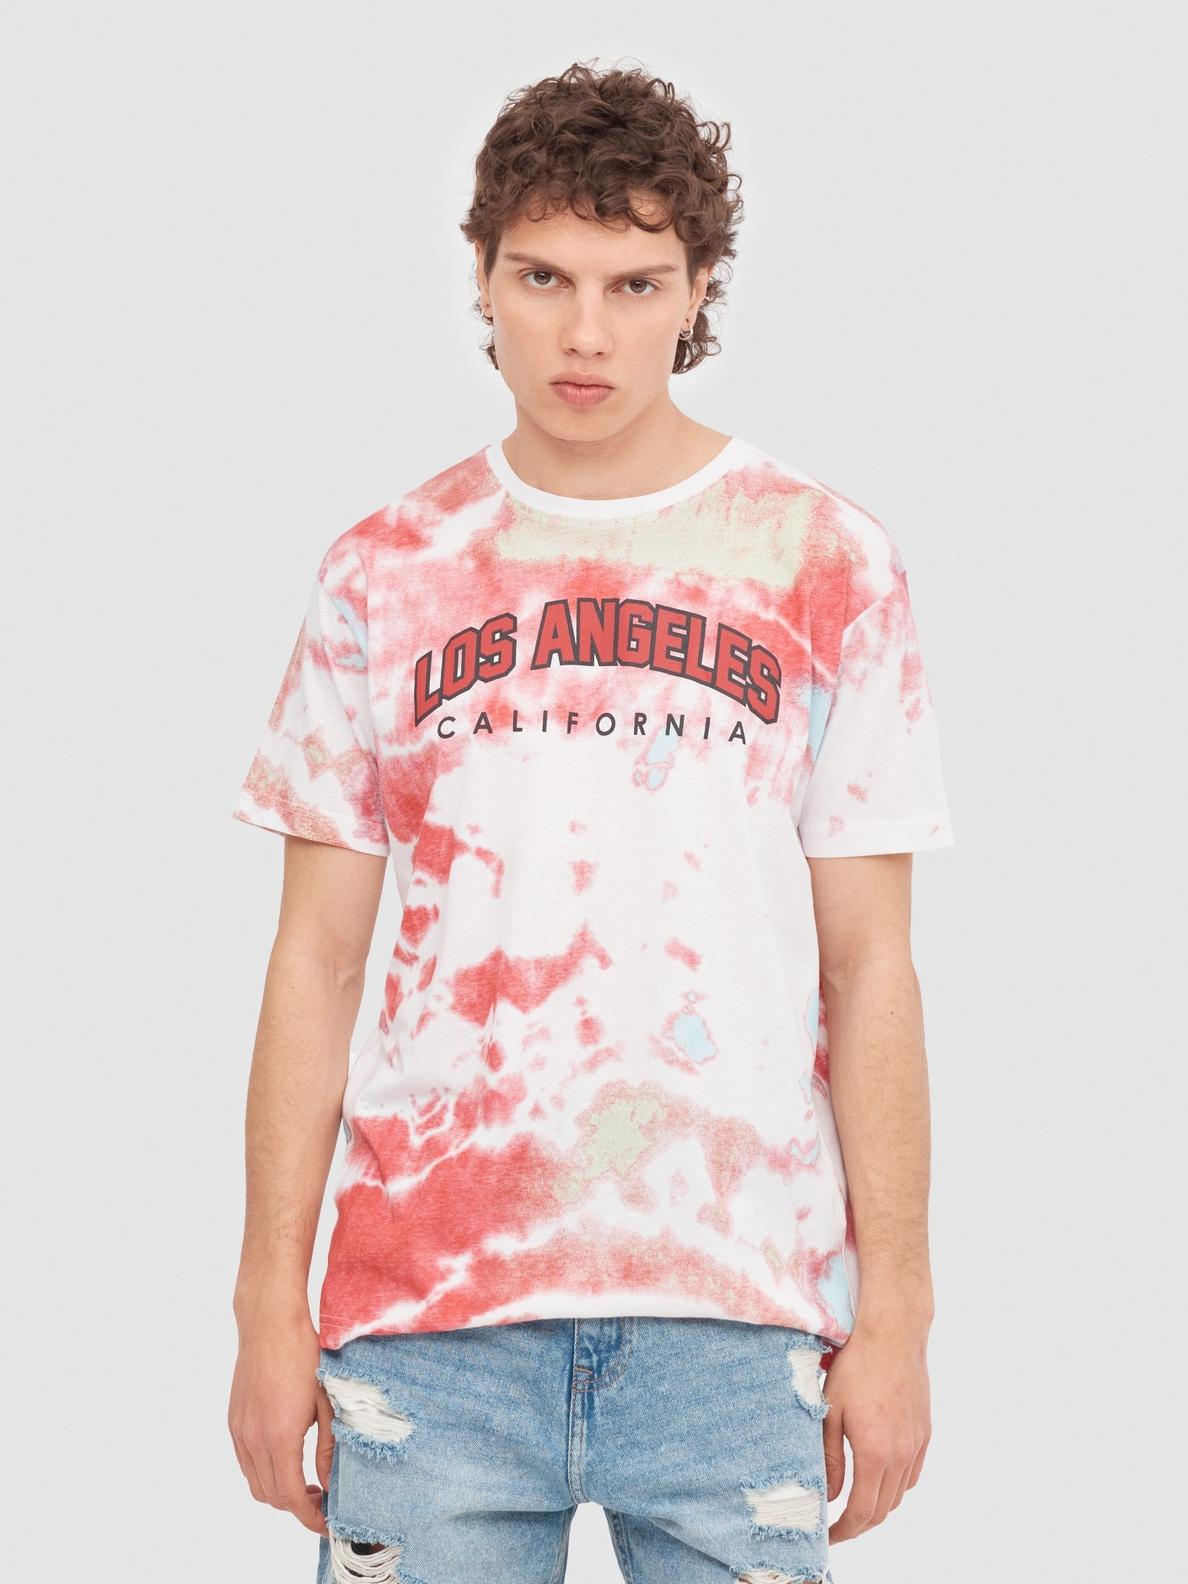 Oferta de Camiseta tie dye por 4,99€ en Inside